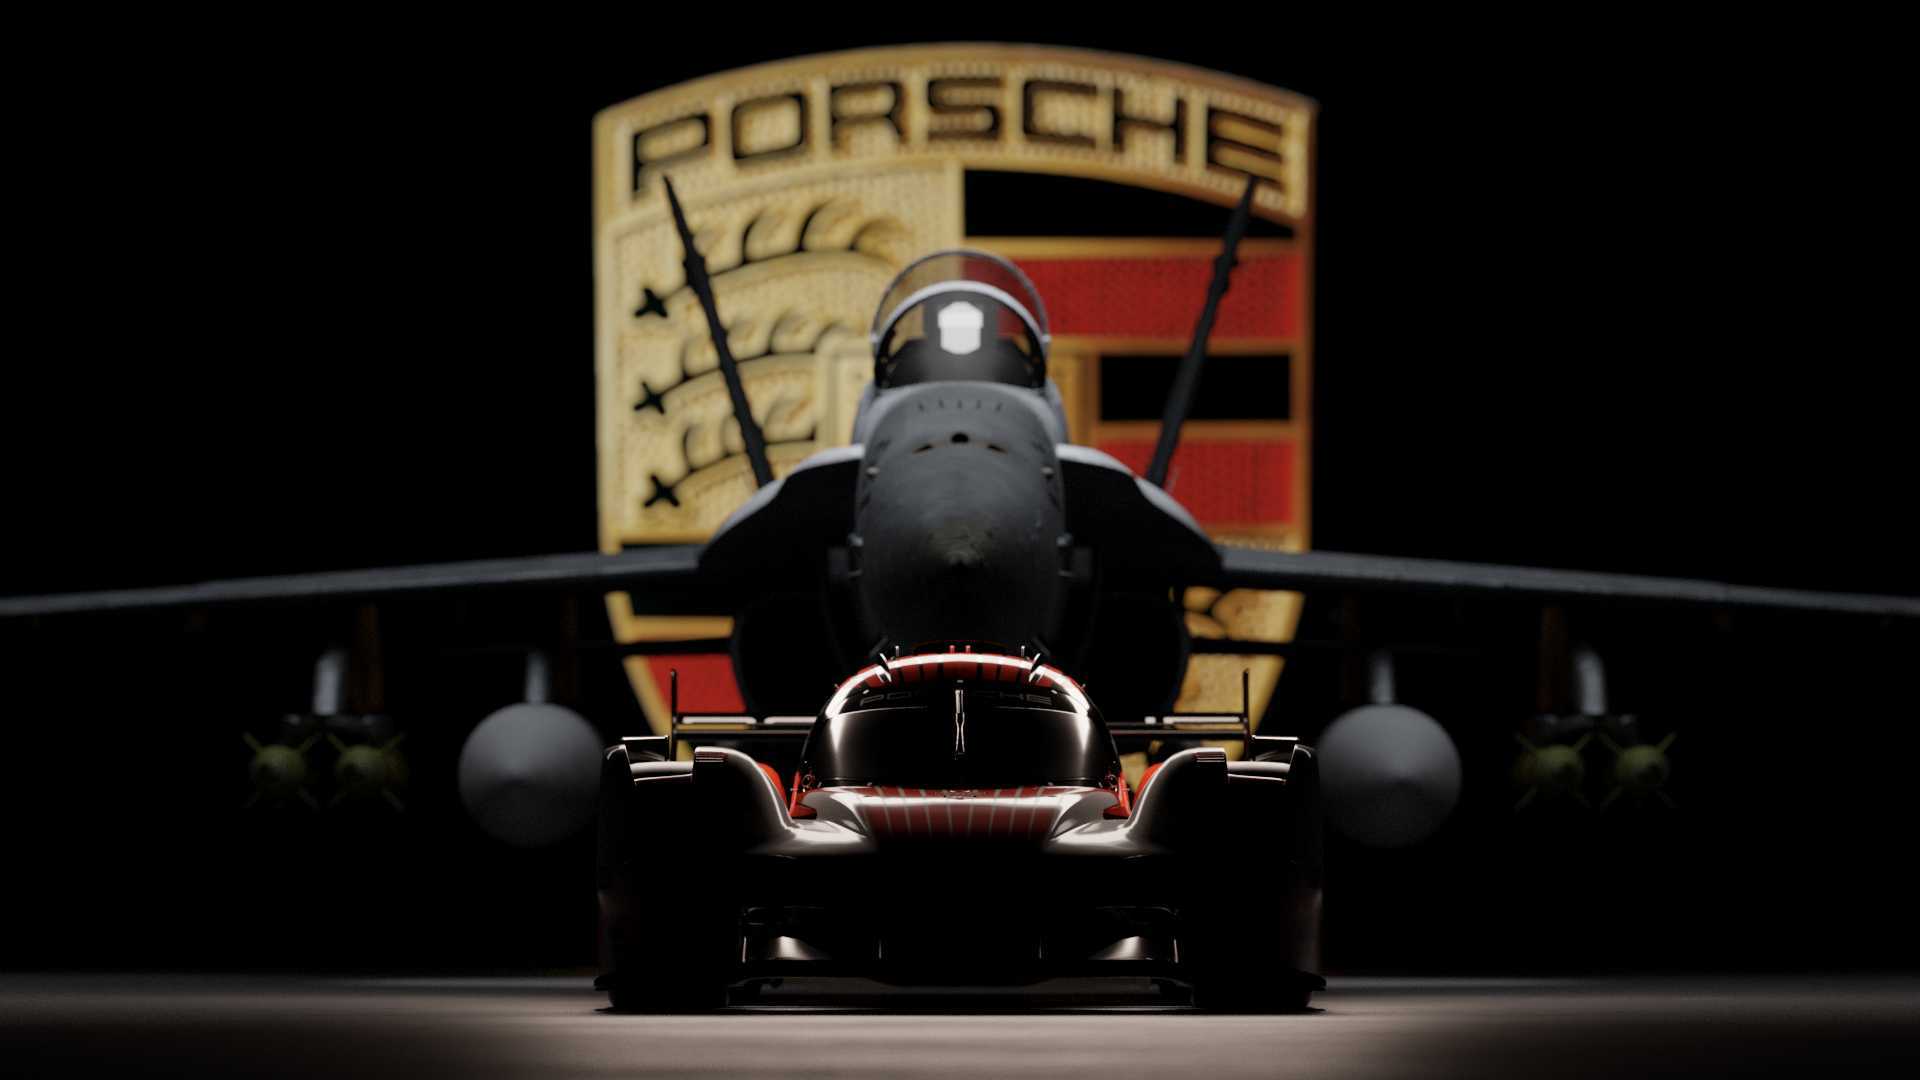 Porsche “Icarus”